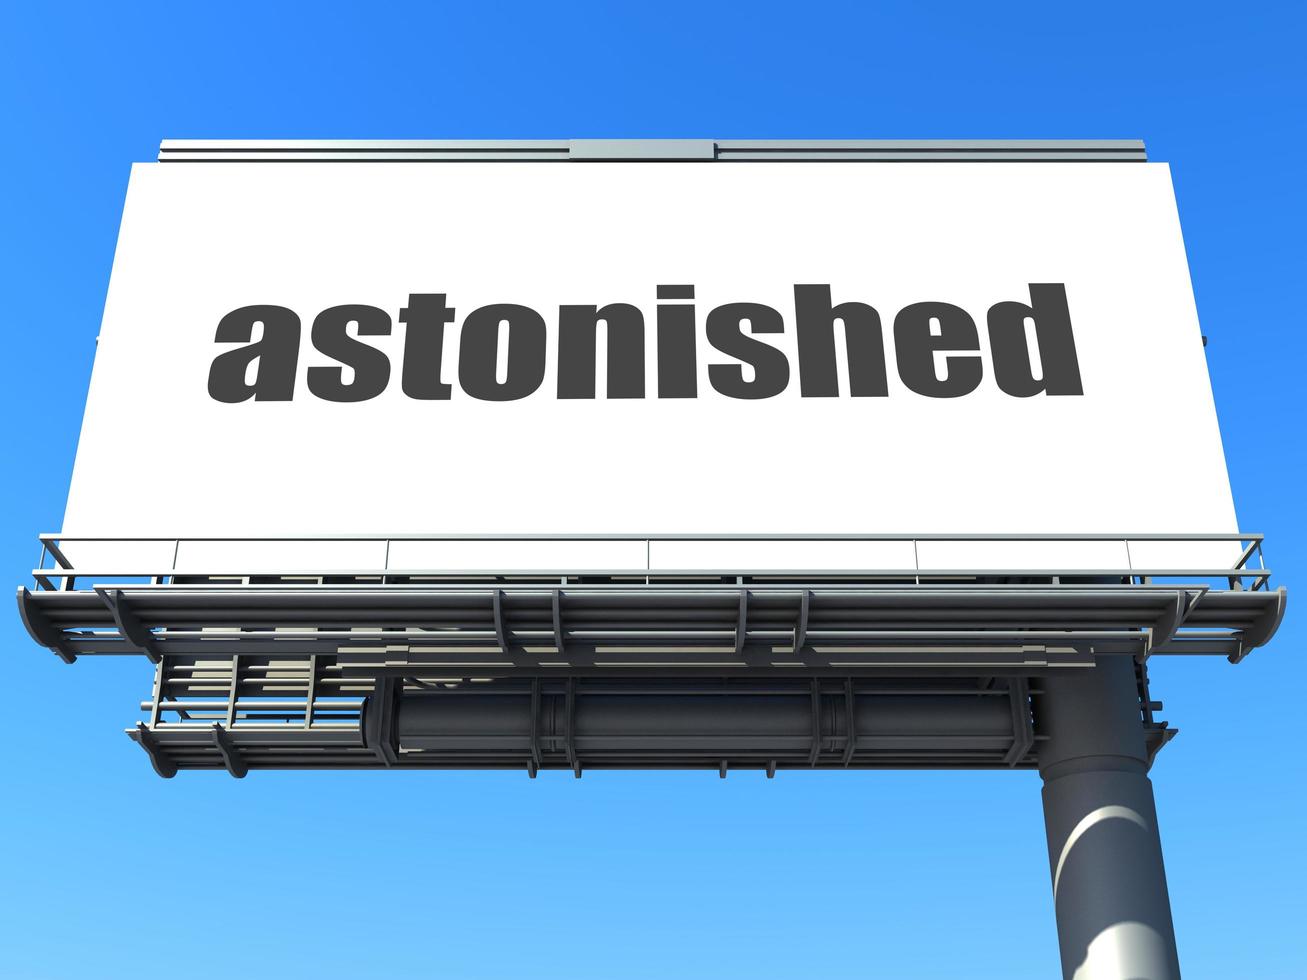 astonished word on billboard photo